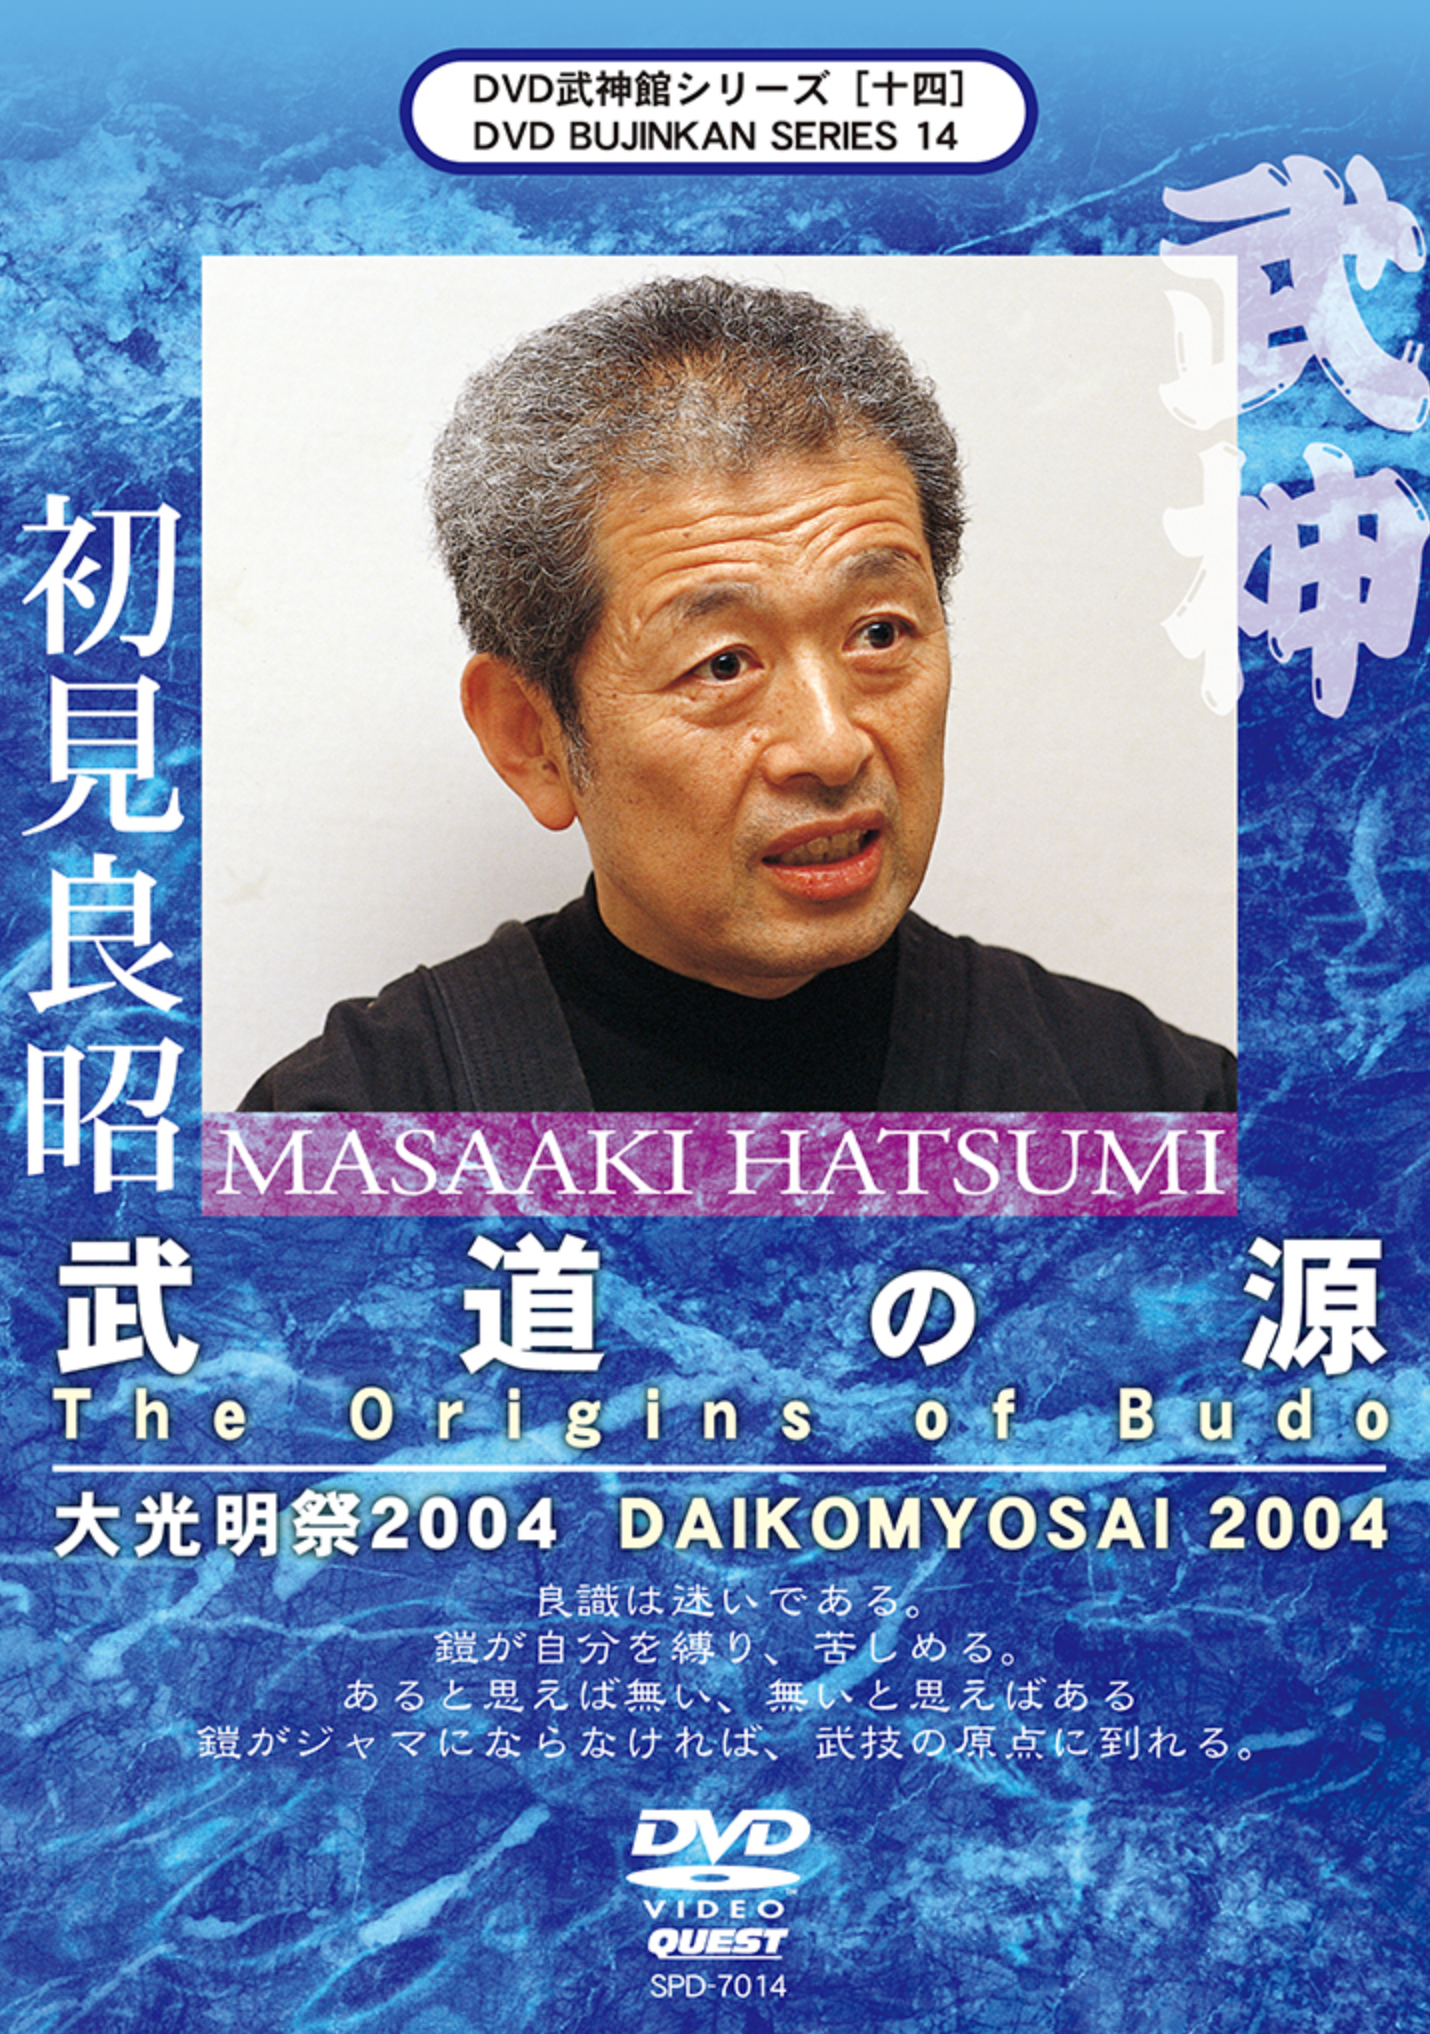 Bujinkan DVD Series 14: The Origins of Budo with Masaaki Hatsumi - Budovideos Inc